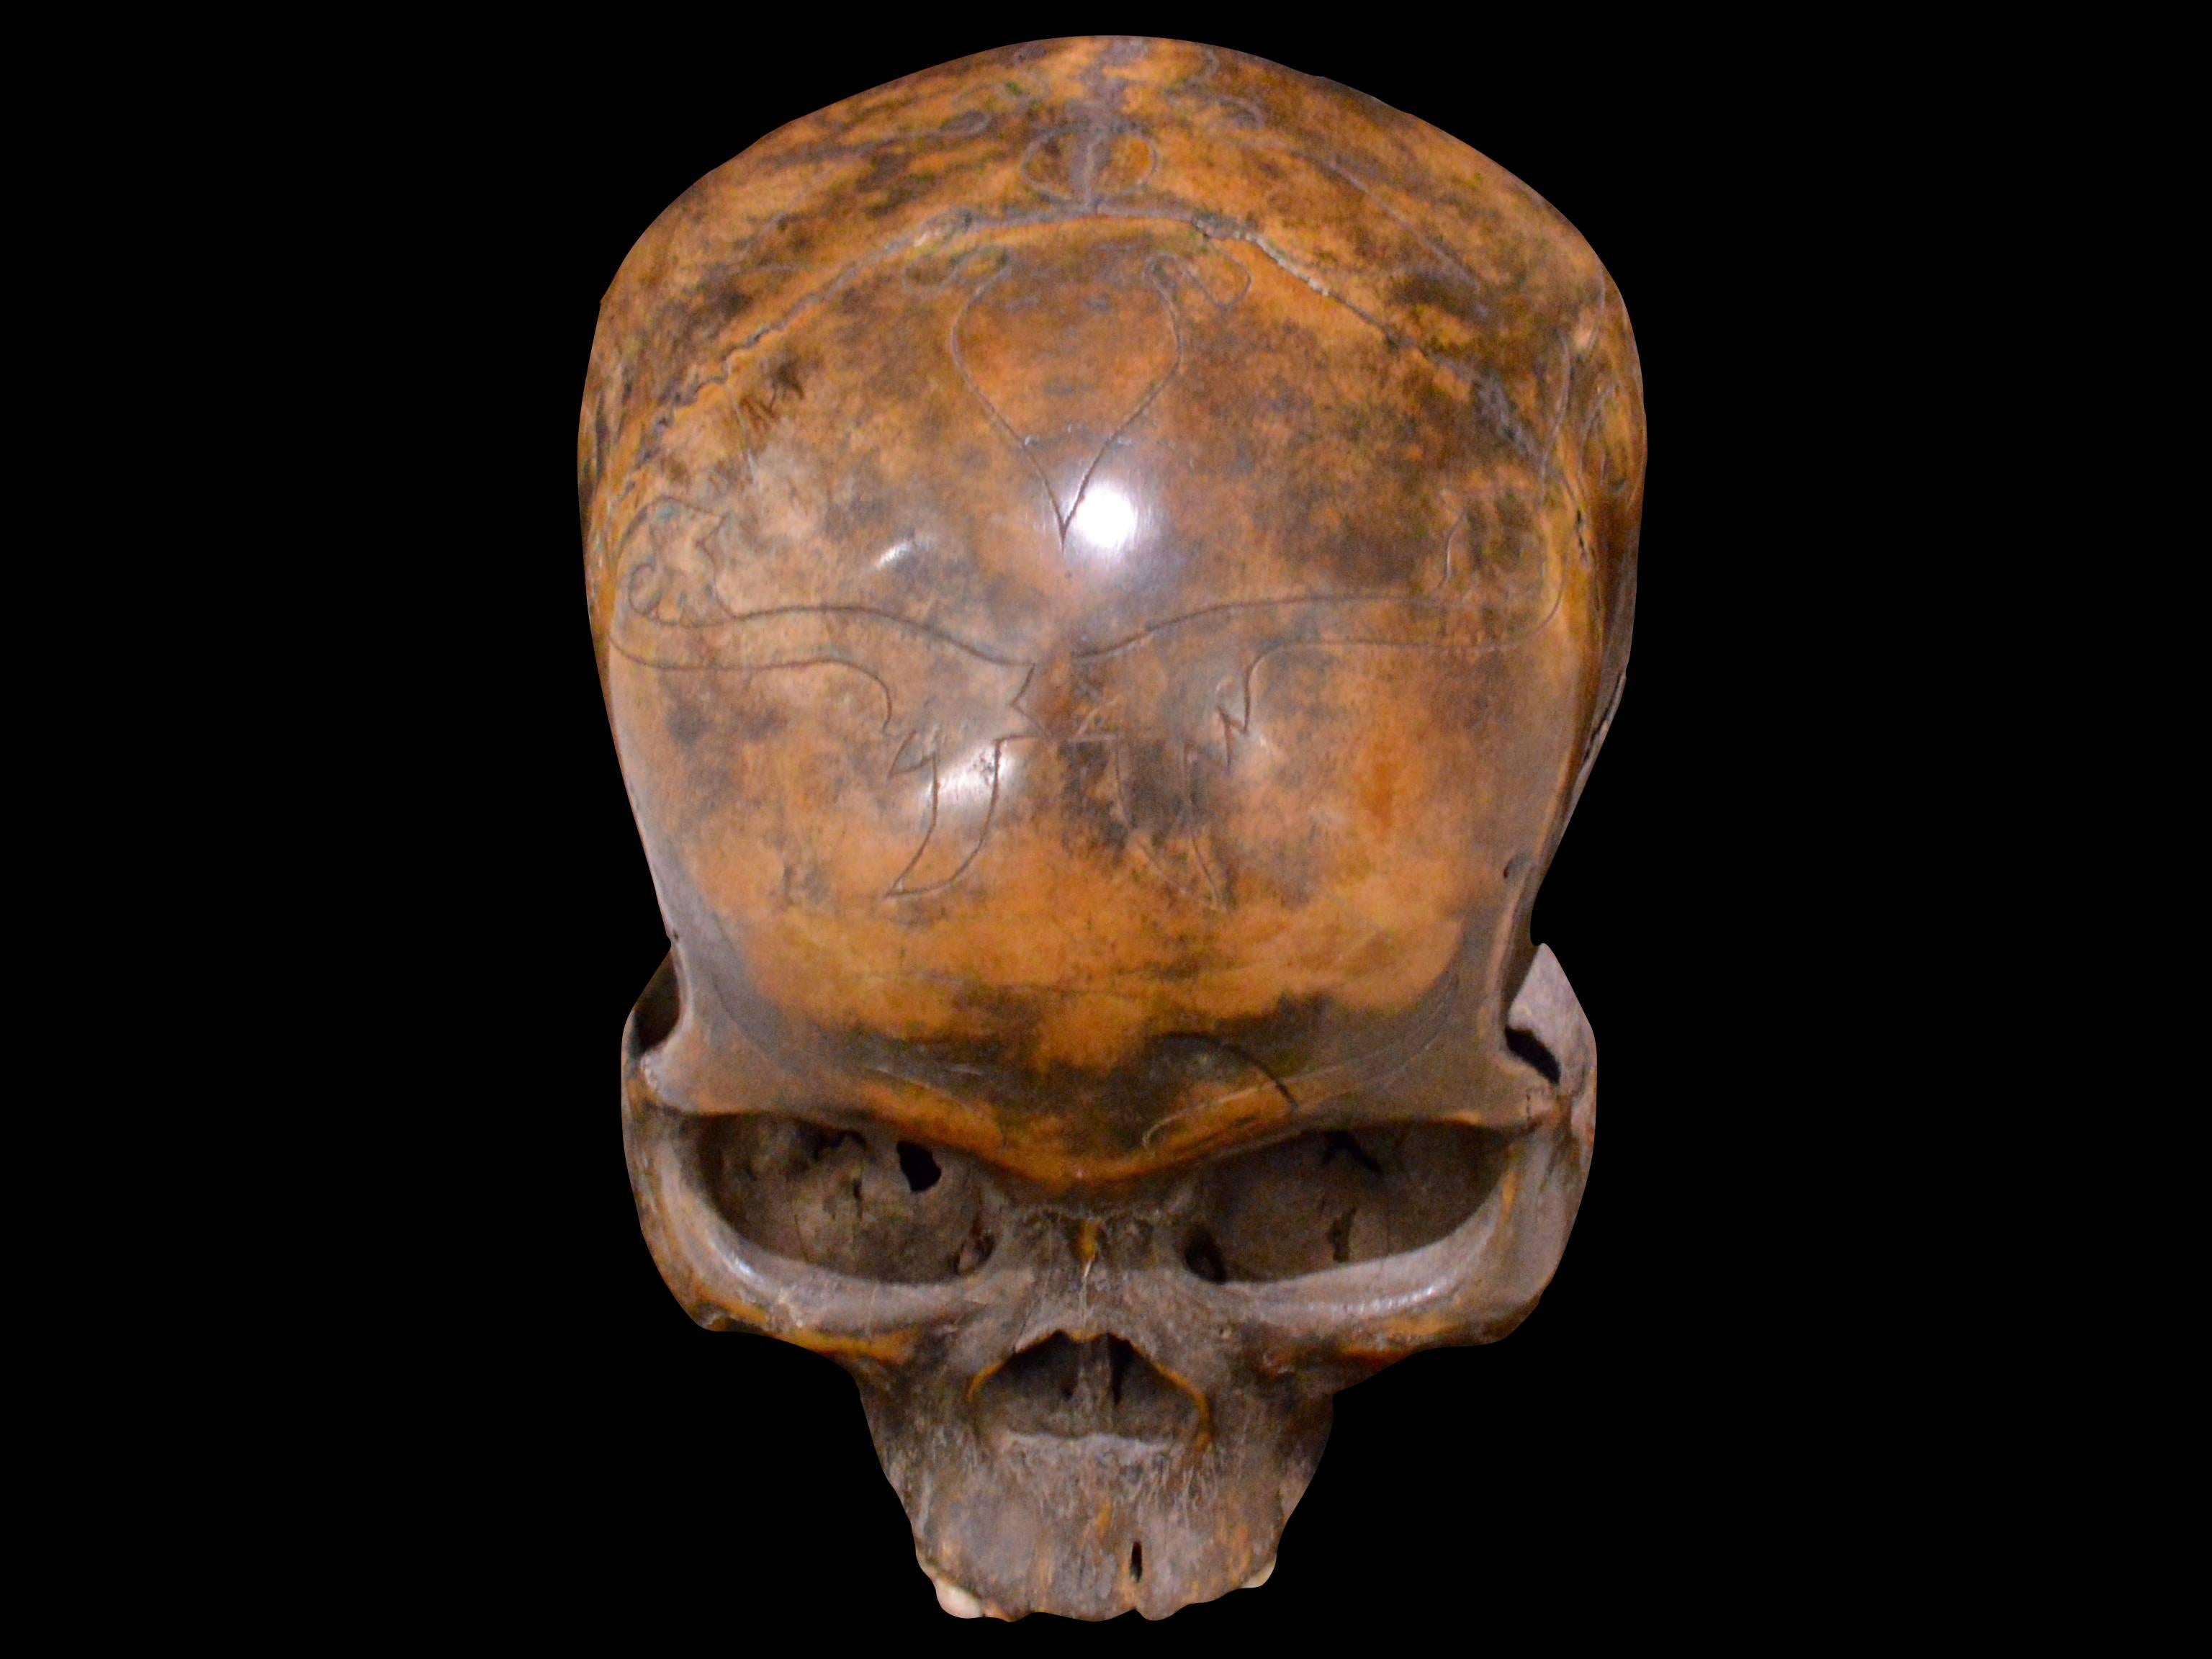 Primitive Striking Dayak Human Trophee Skull ‘Ndaokus’ from Borneo Indonesia